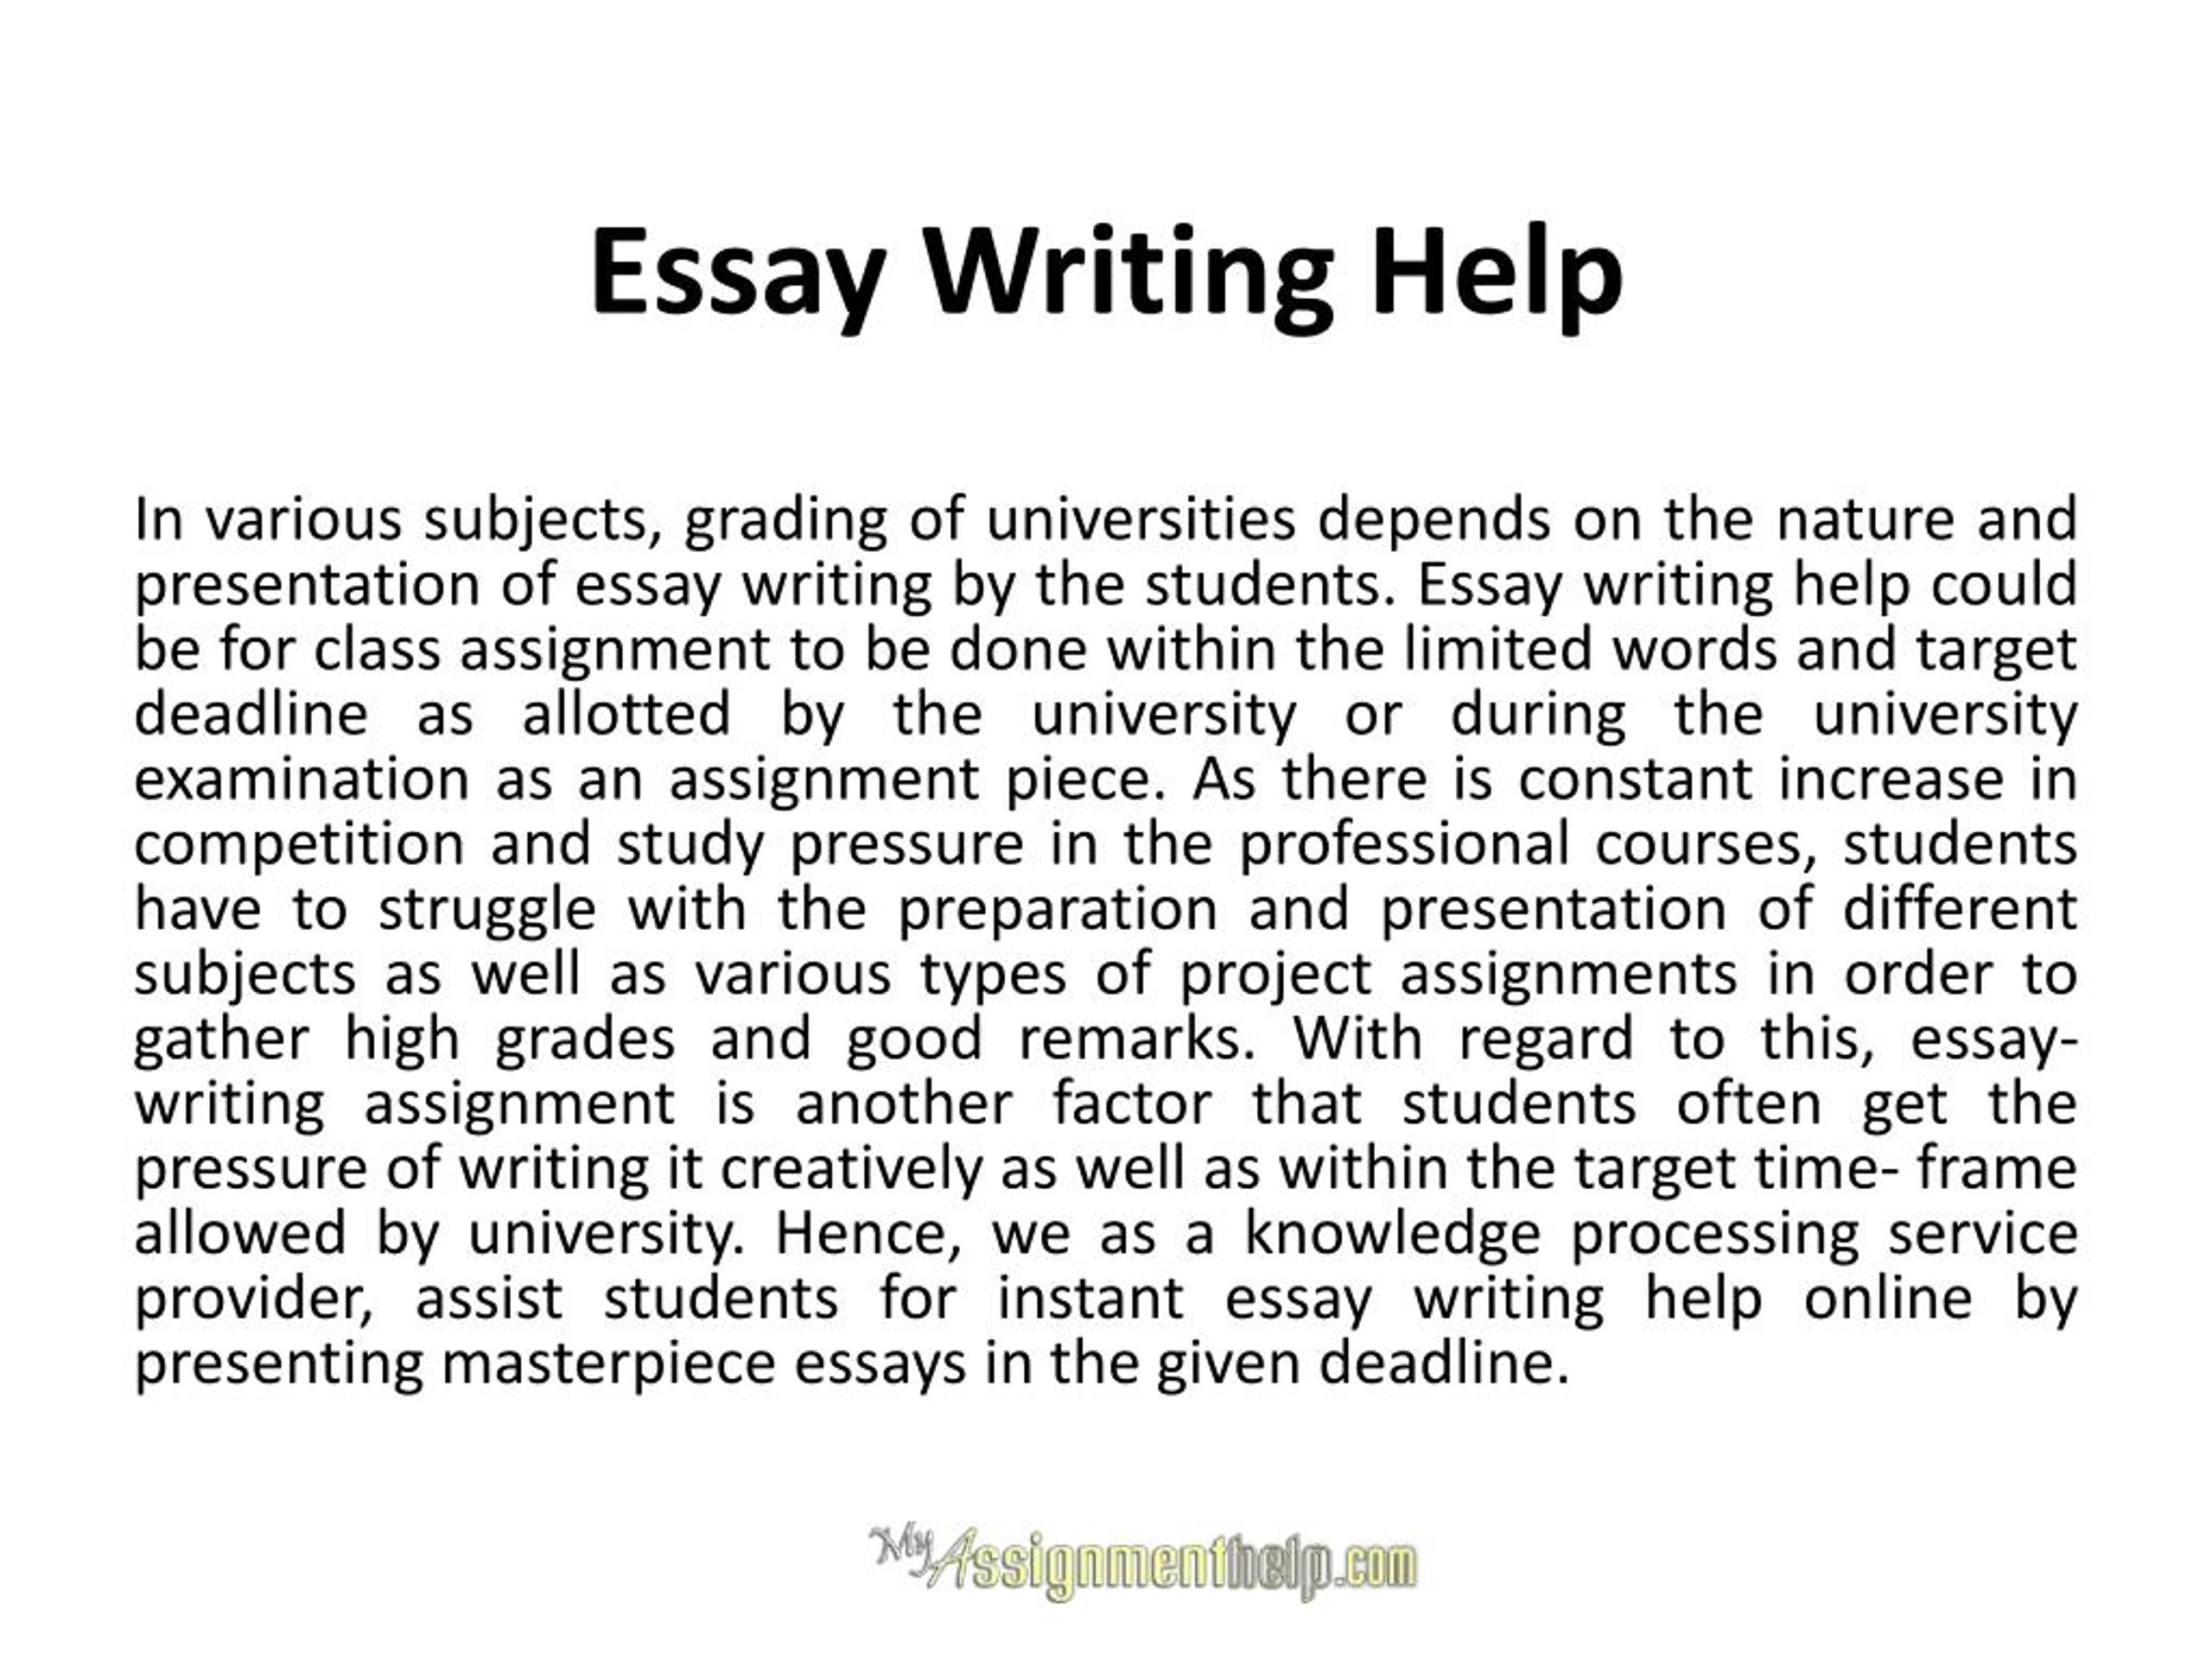 i need help with essay writing